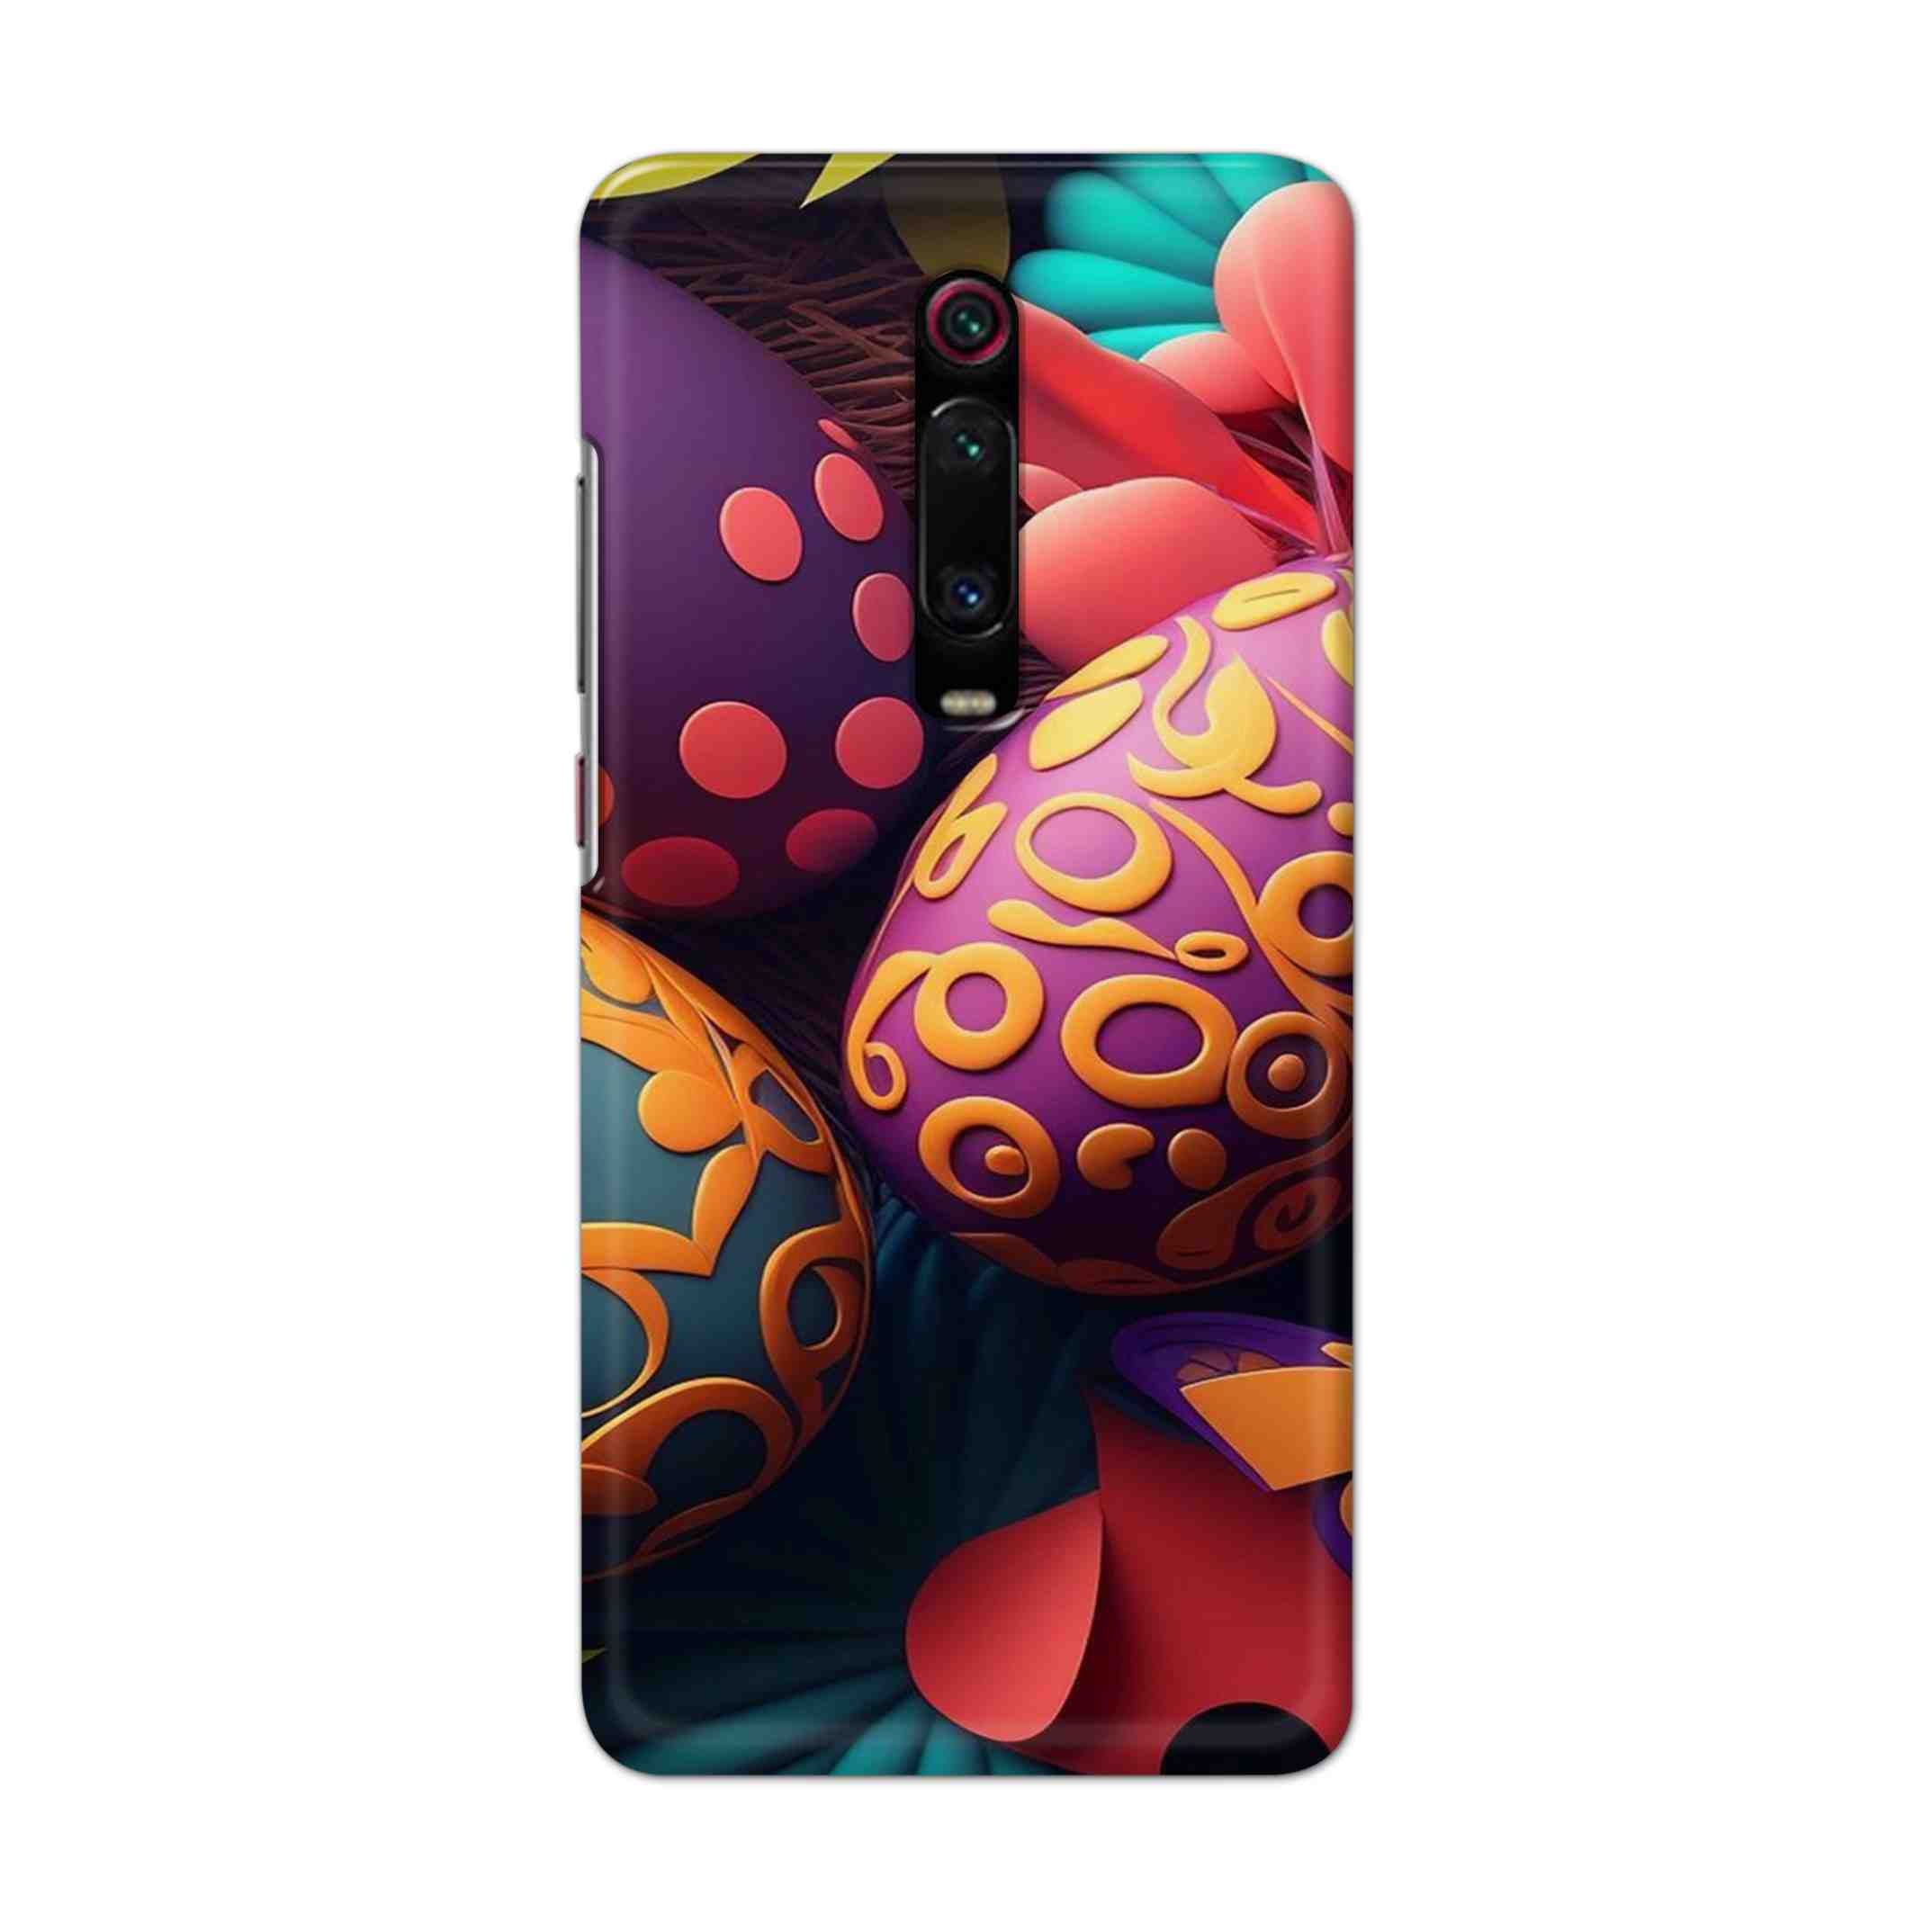 Buy Easter Egg Hard Back Mobile Phone Case Cover For Xiaomi Redmi K20 Online